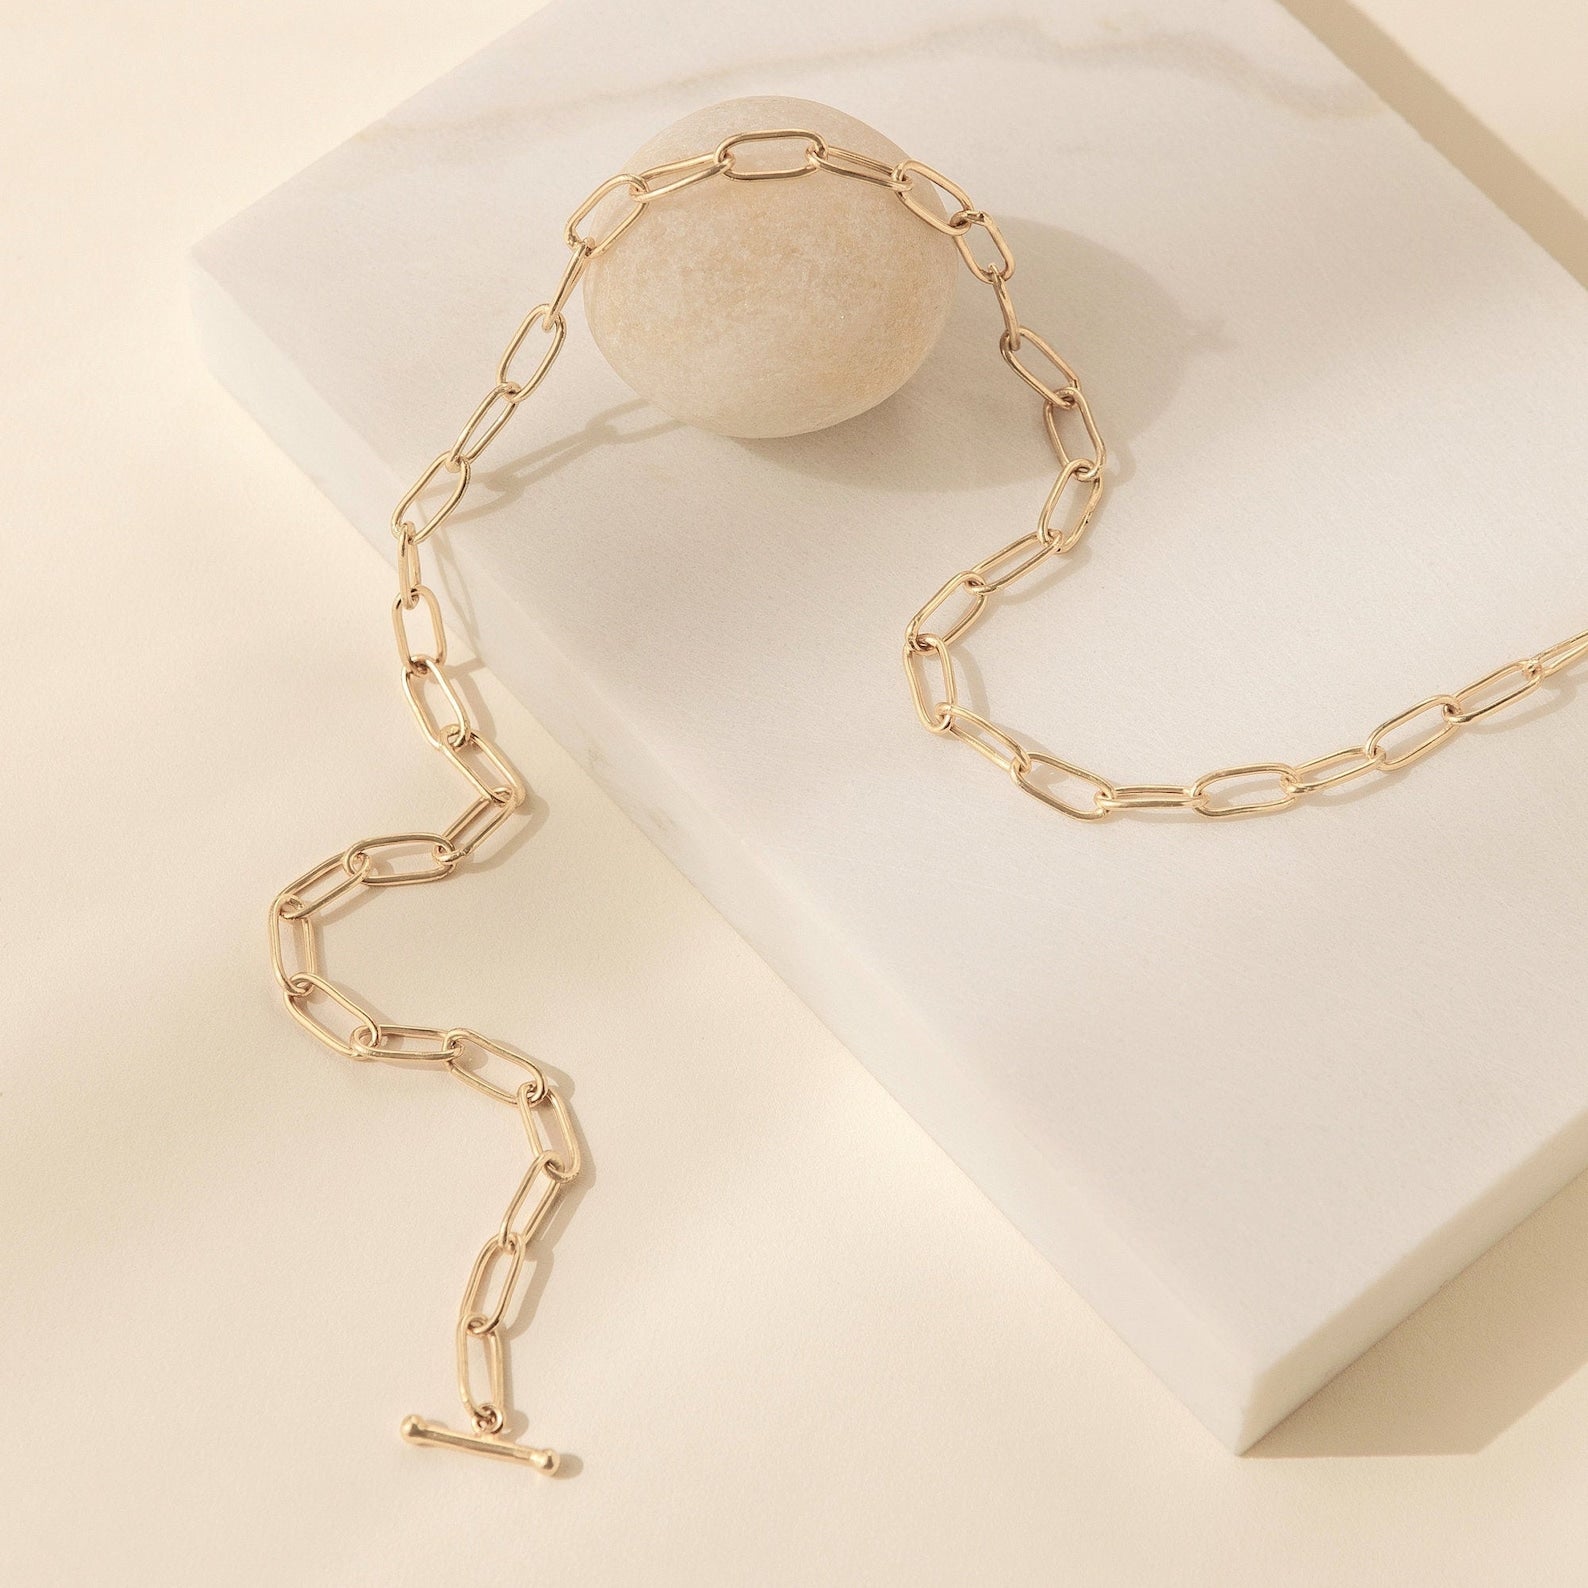 KIKICHIC Minimalist Jewelry Lock Charm Paper Clip Link Chain Necklace